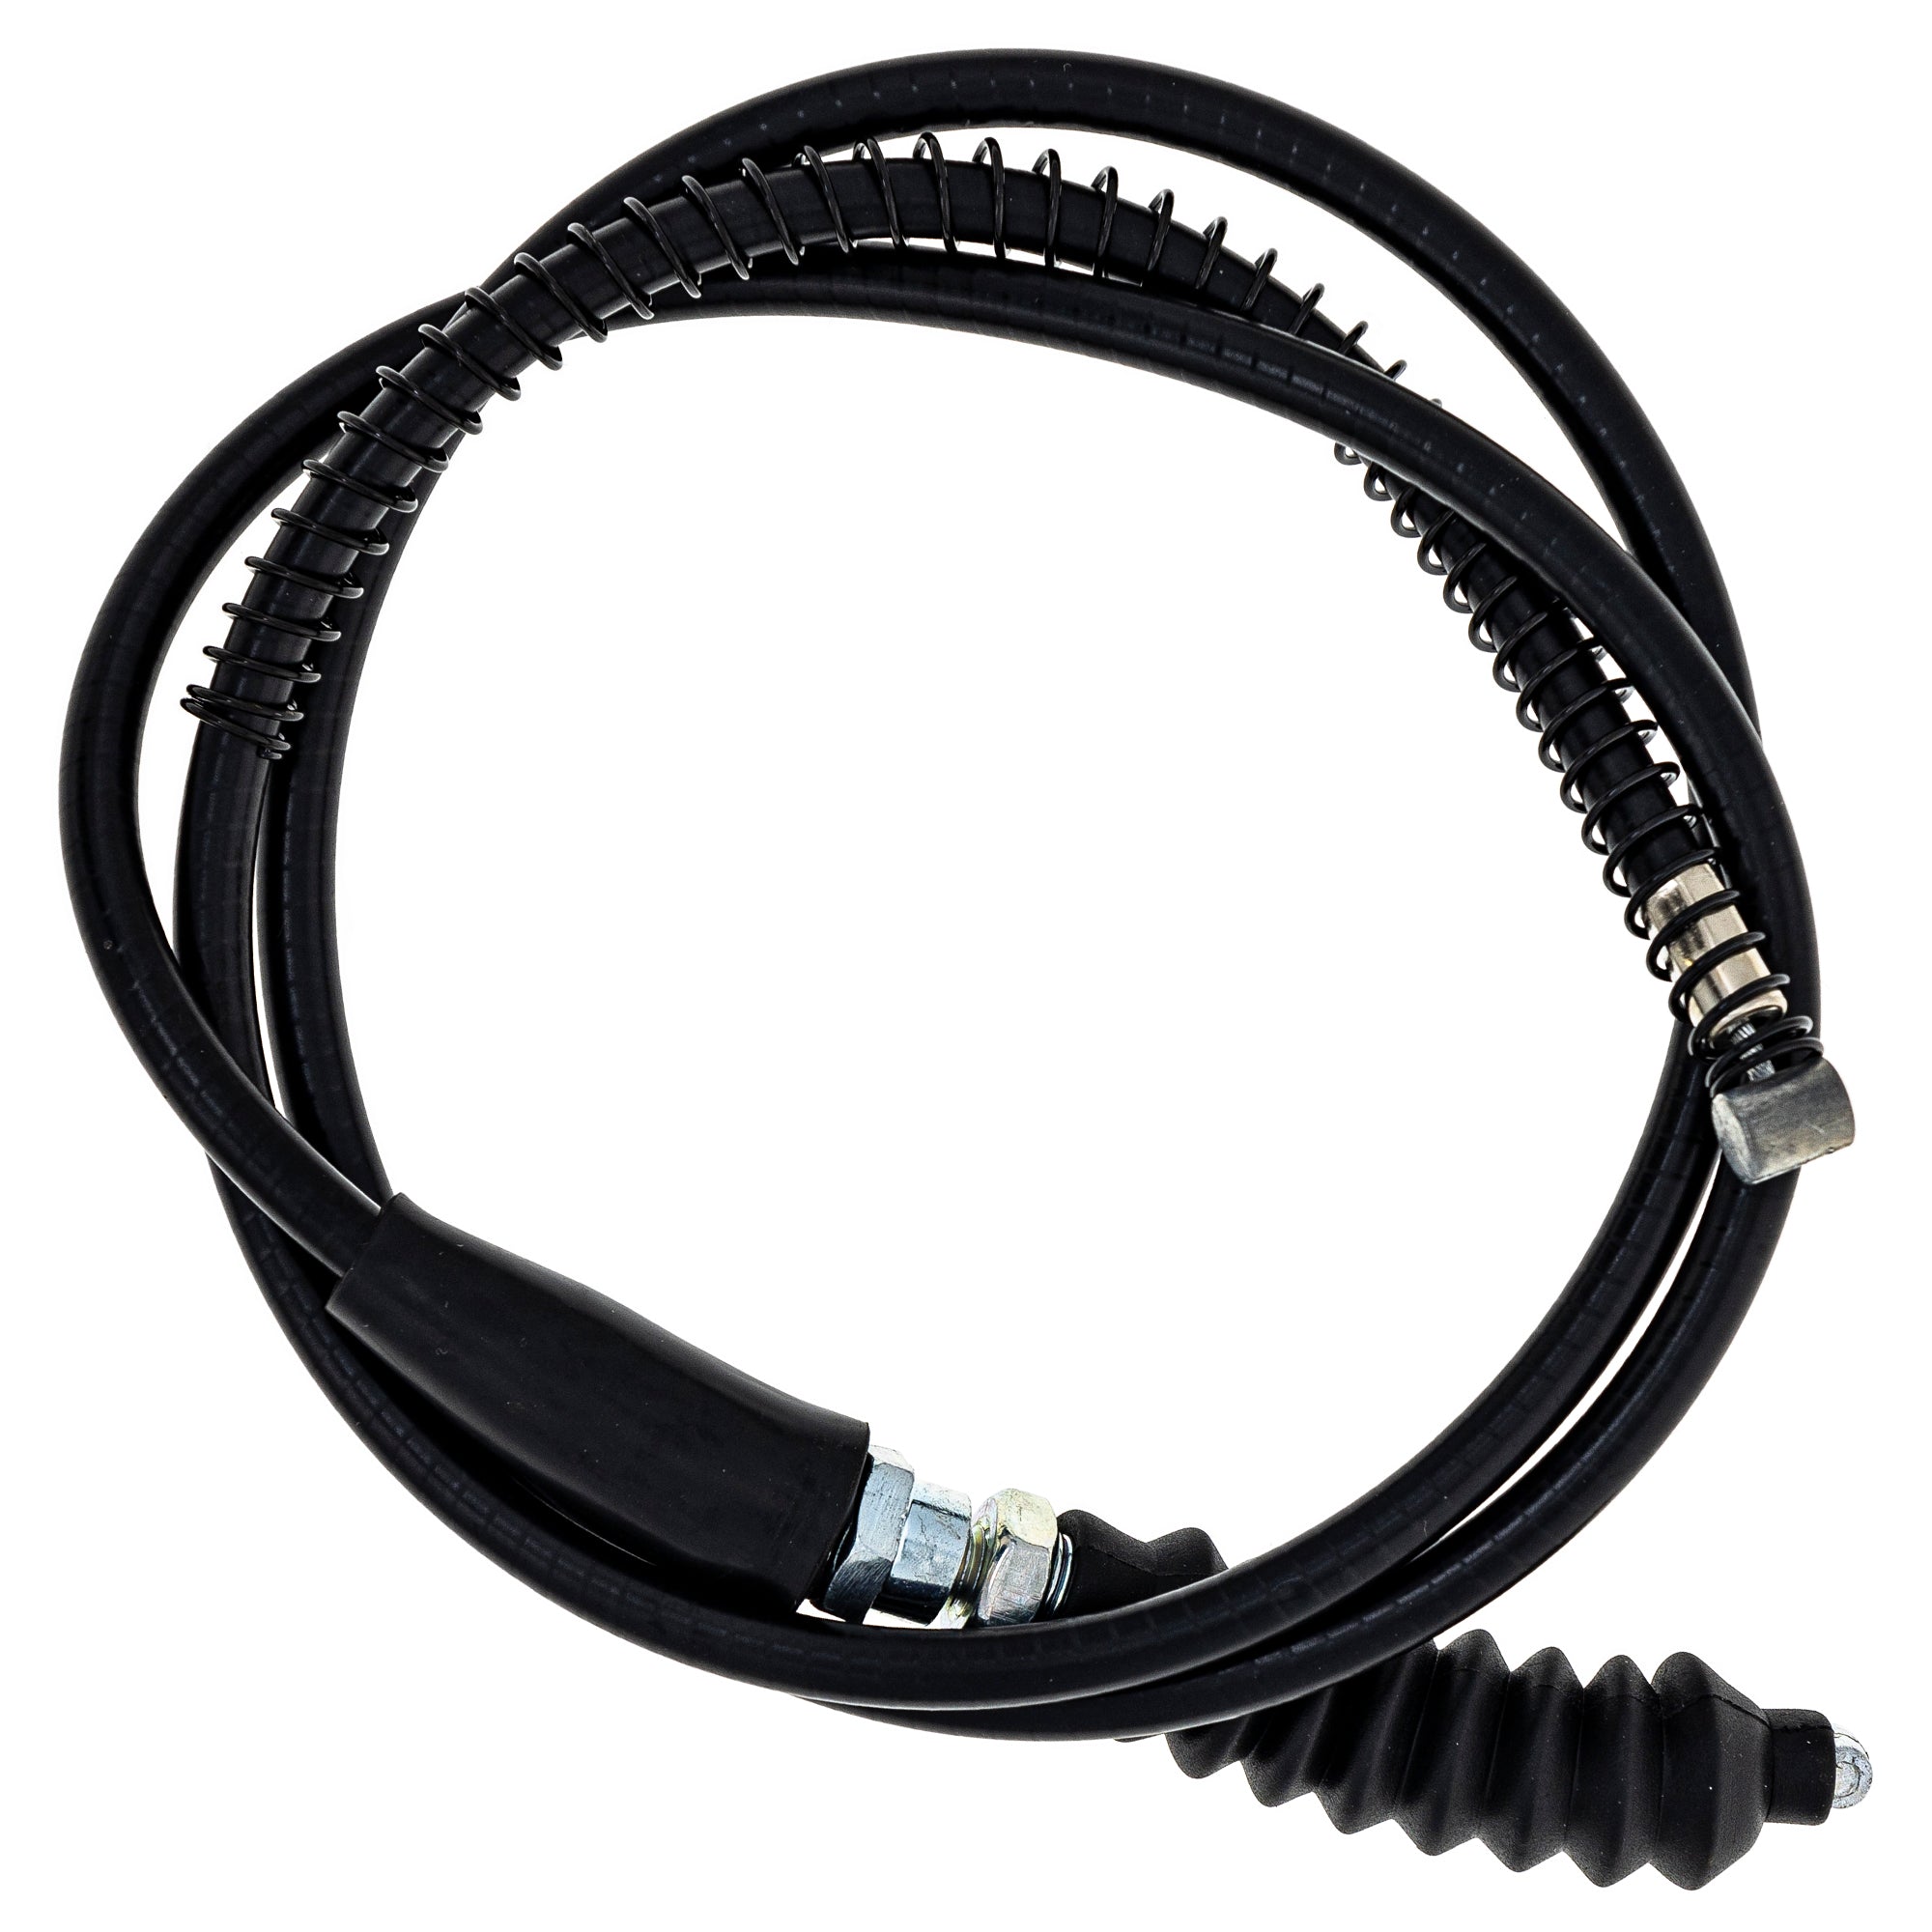 Clutch Cable for zOTHER KX420 KX250 KX125 KDX420 NICHE 519-CCB2697L